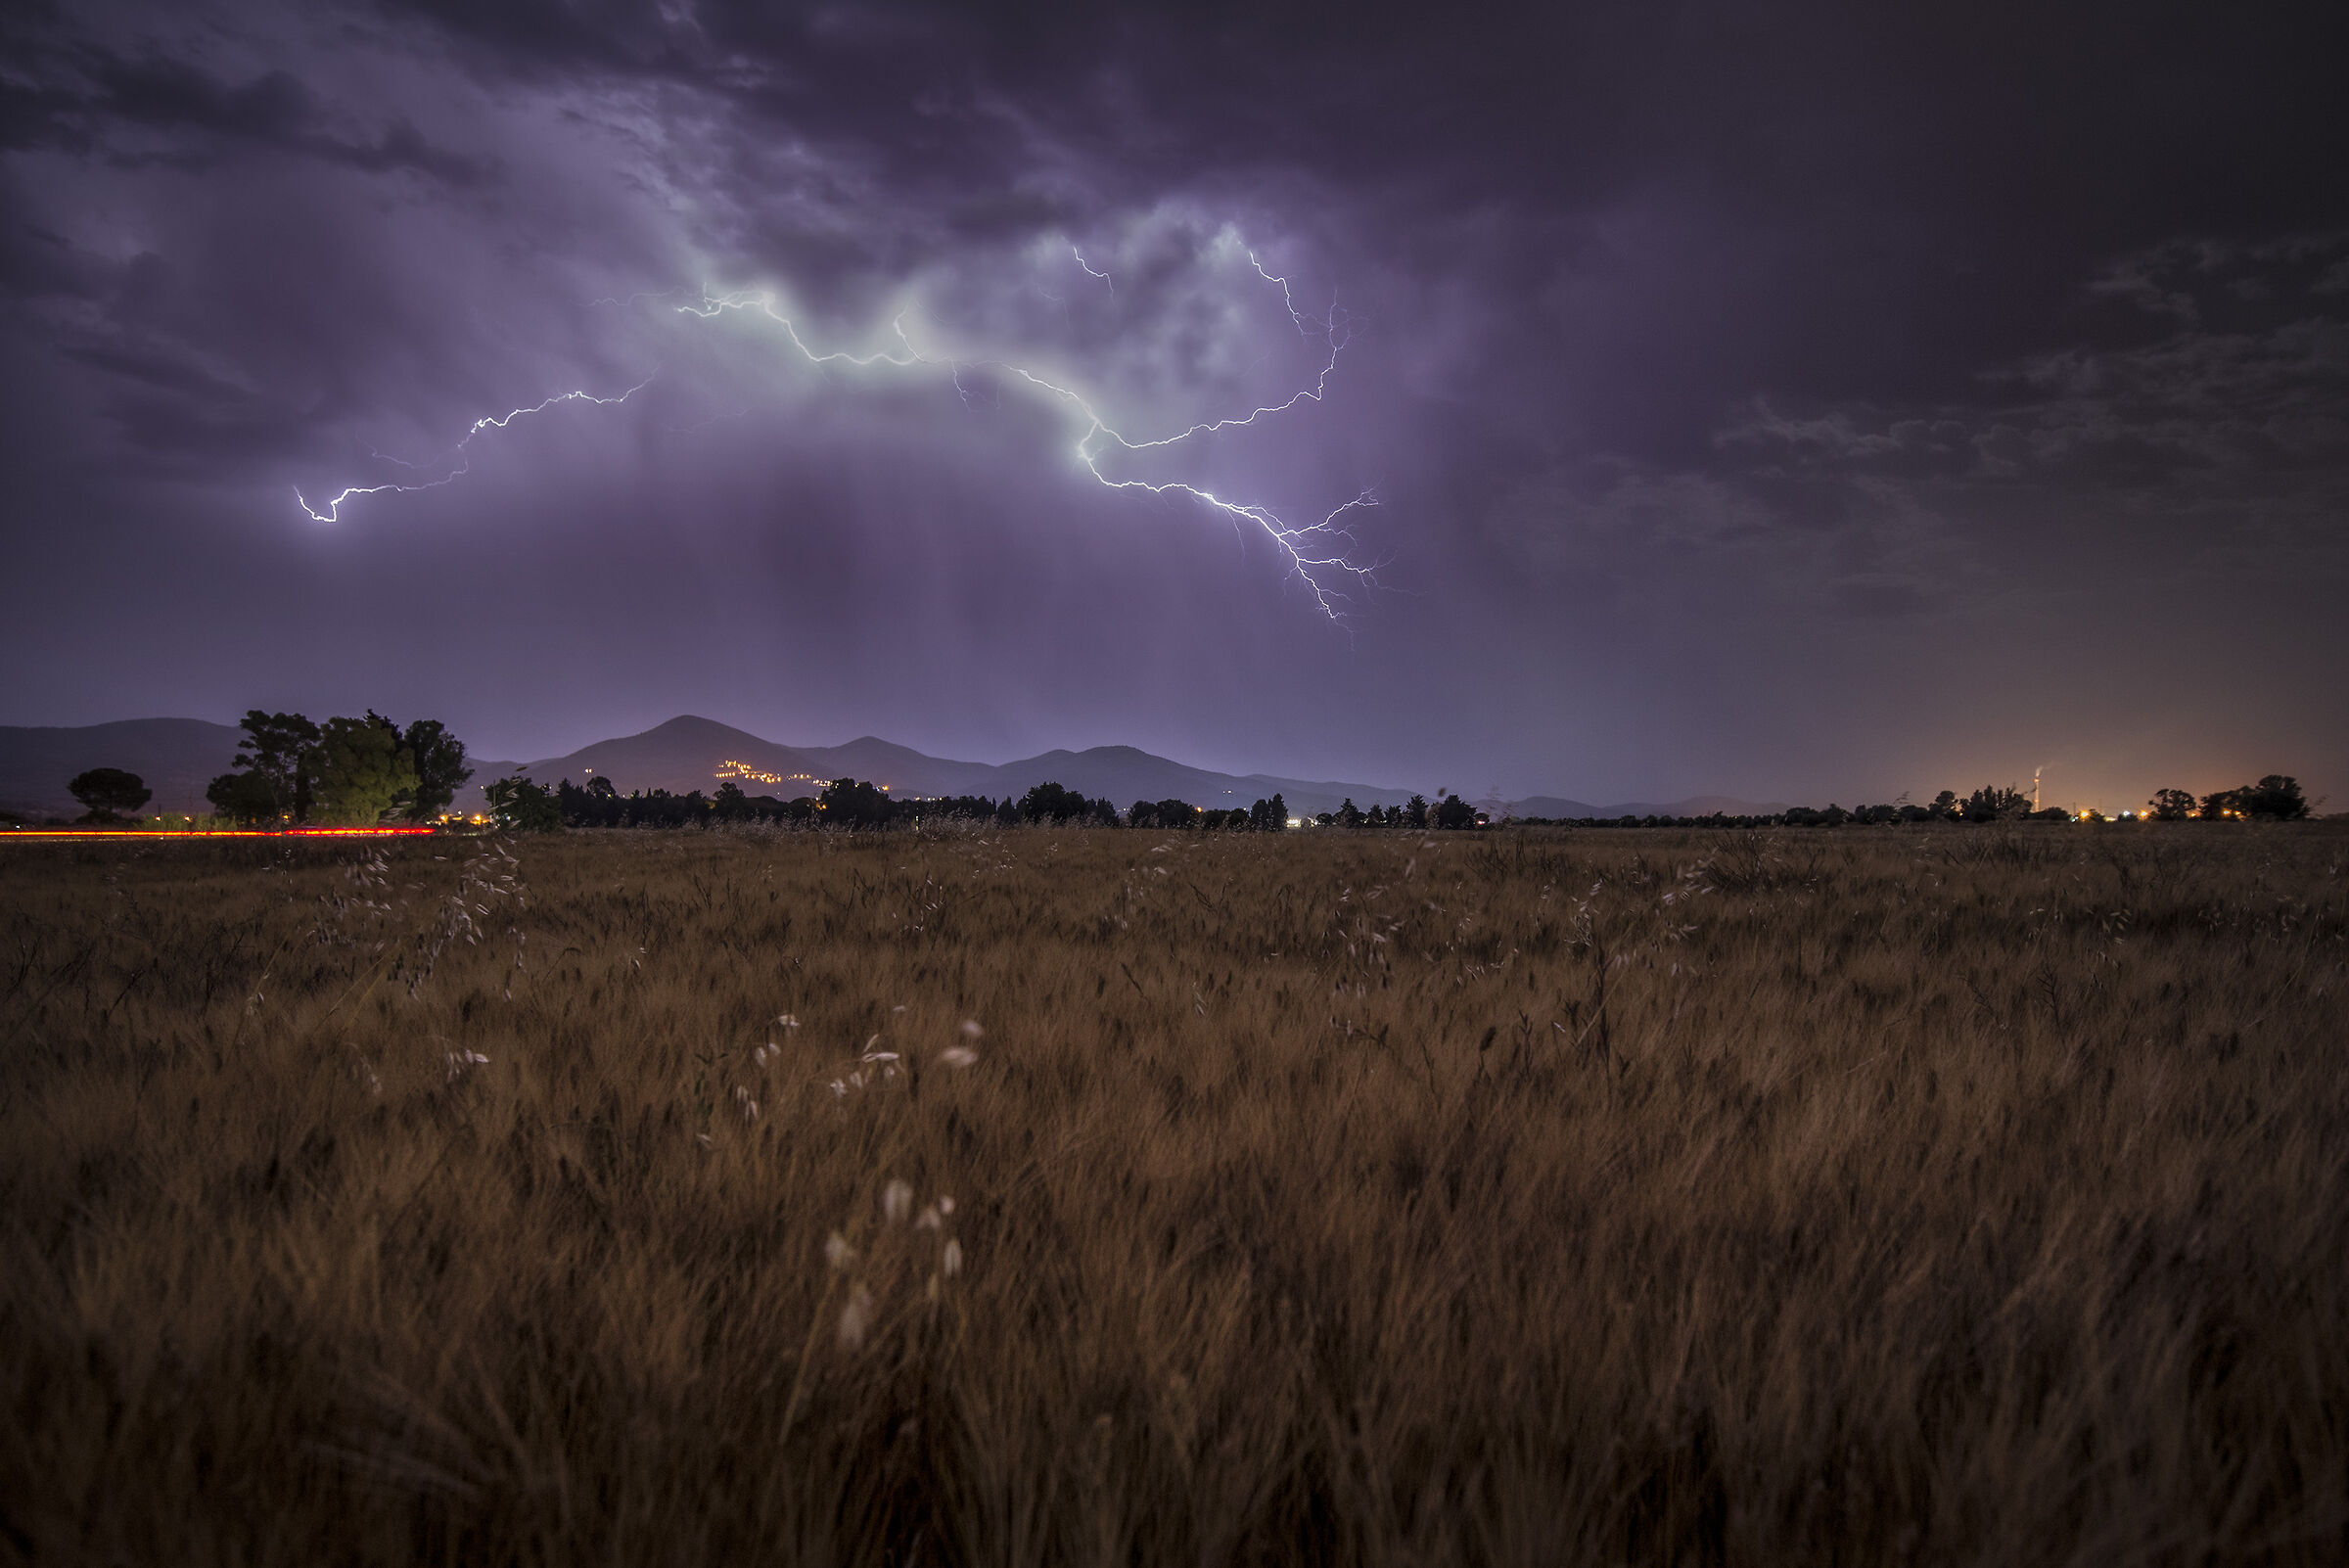 Lightning in the fields...